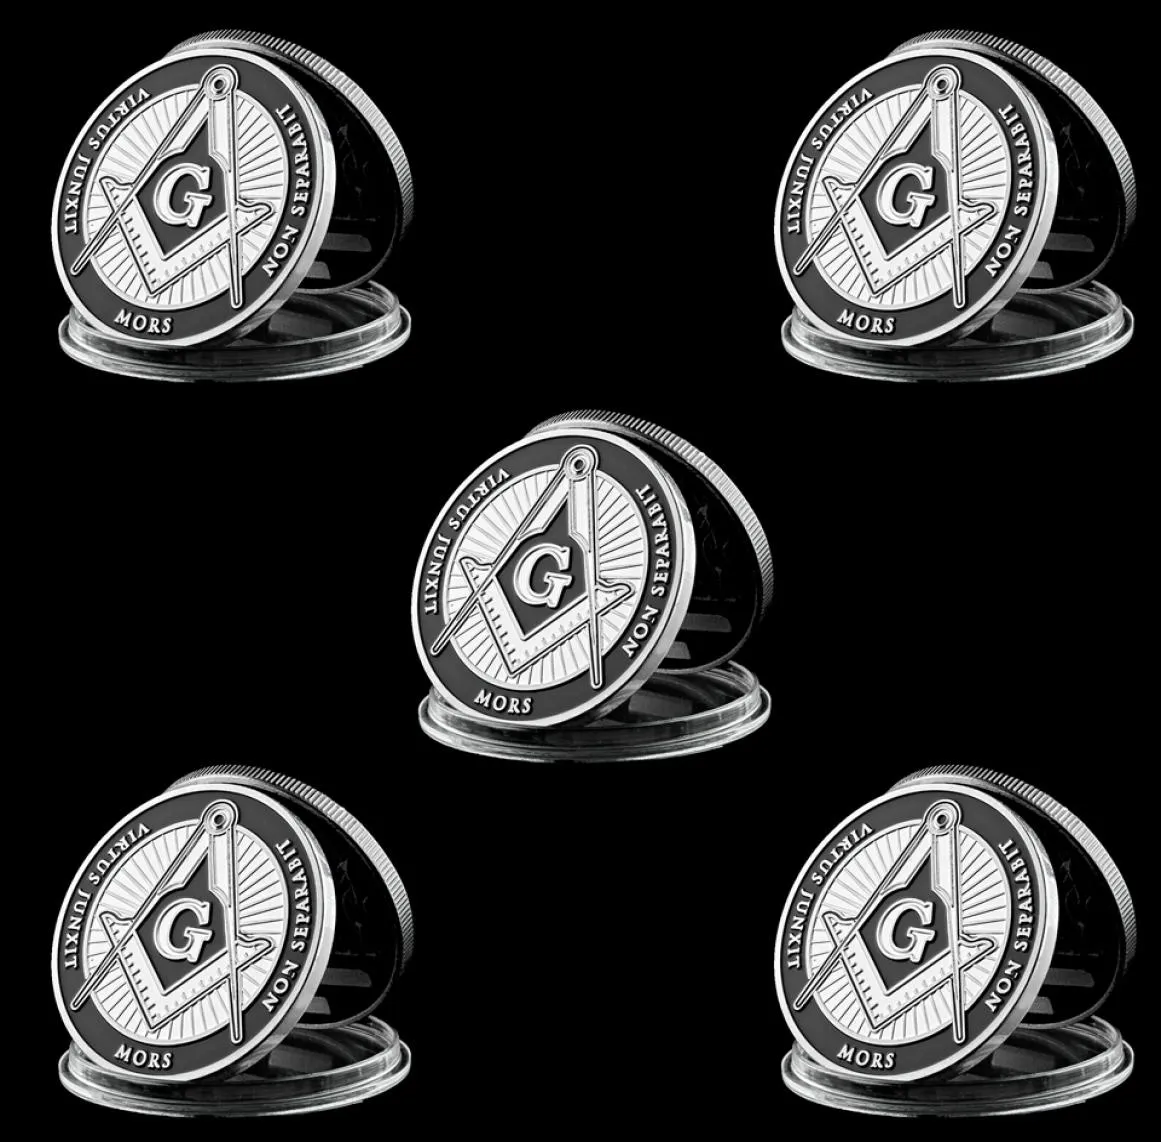 5pcs Collection Coin European Brotherhood masons Masonic Craft Token 1 oz Silver Plated Challenge Badge6096397